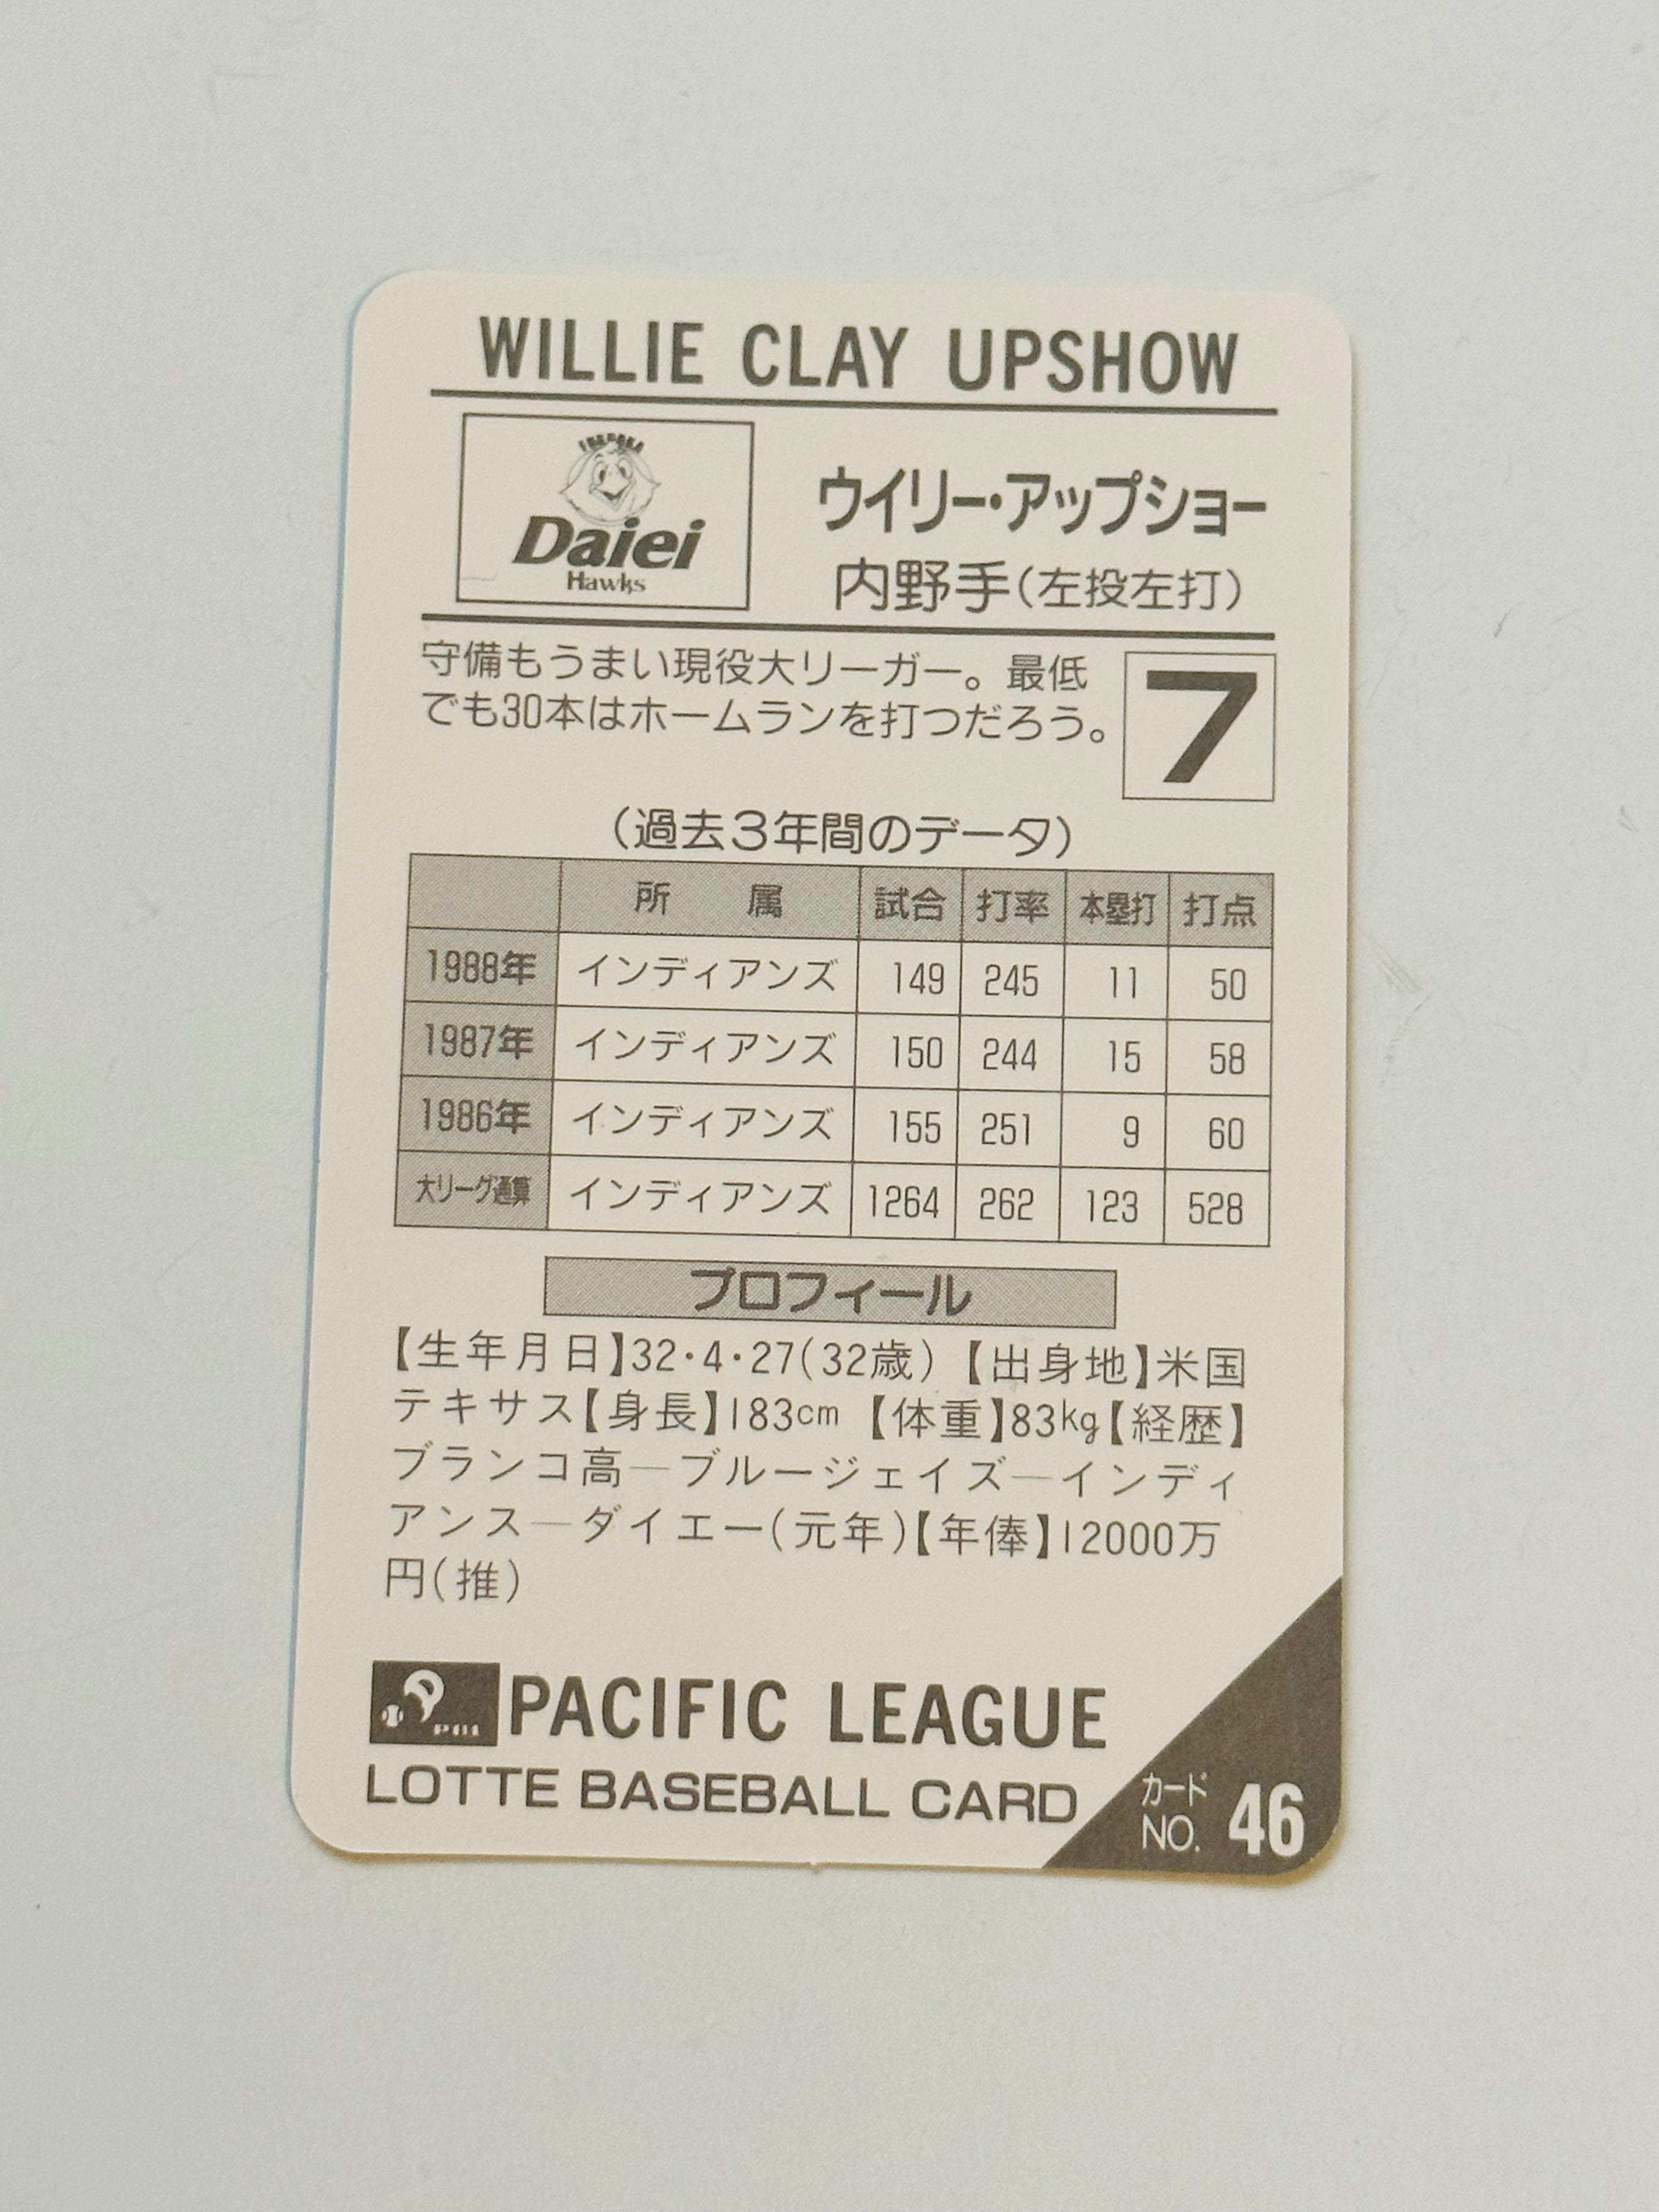 Willie Upshaw rare Japanese baseball card 1988